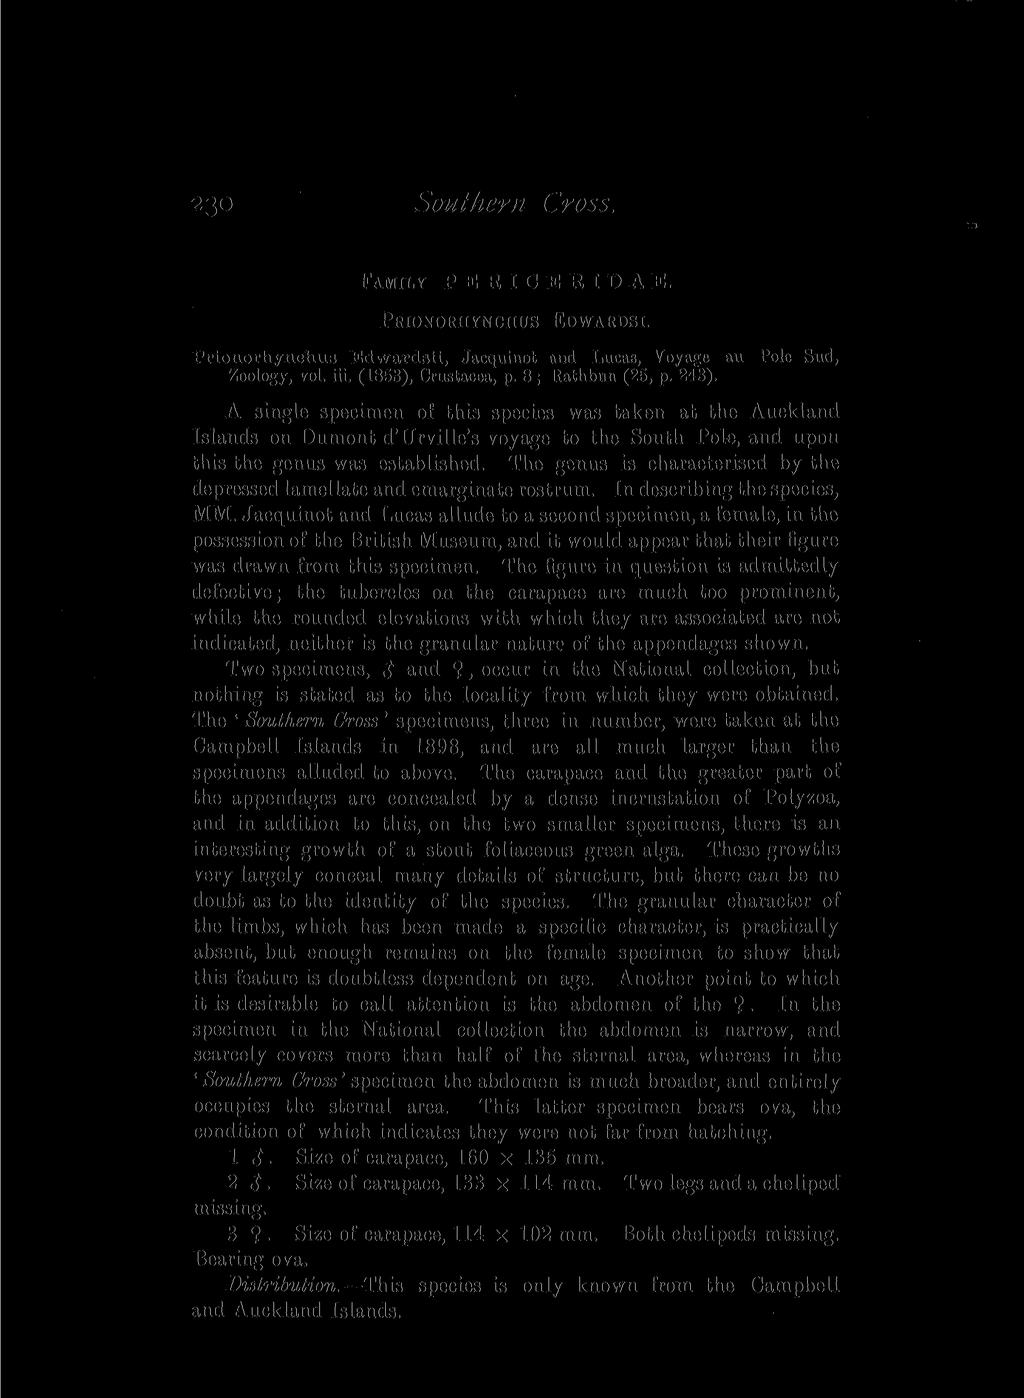 230 Southern Cross. FAMILY P E R I C E R I D A E. PRIONORHYNCHUS EDWARDSI. Prionorhynchus Edwardsii, Jacquinot and Lucas, Voyage au Pole Sud, Zoology, vol. iii. (1853), Crustacea, p.